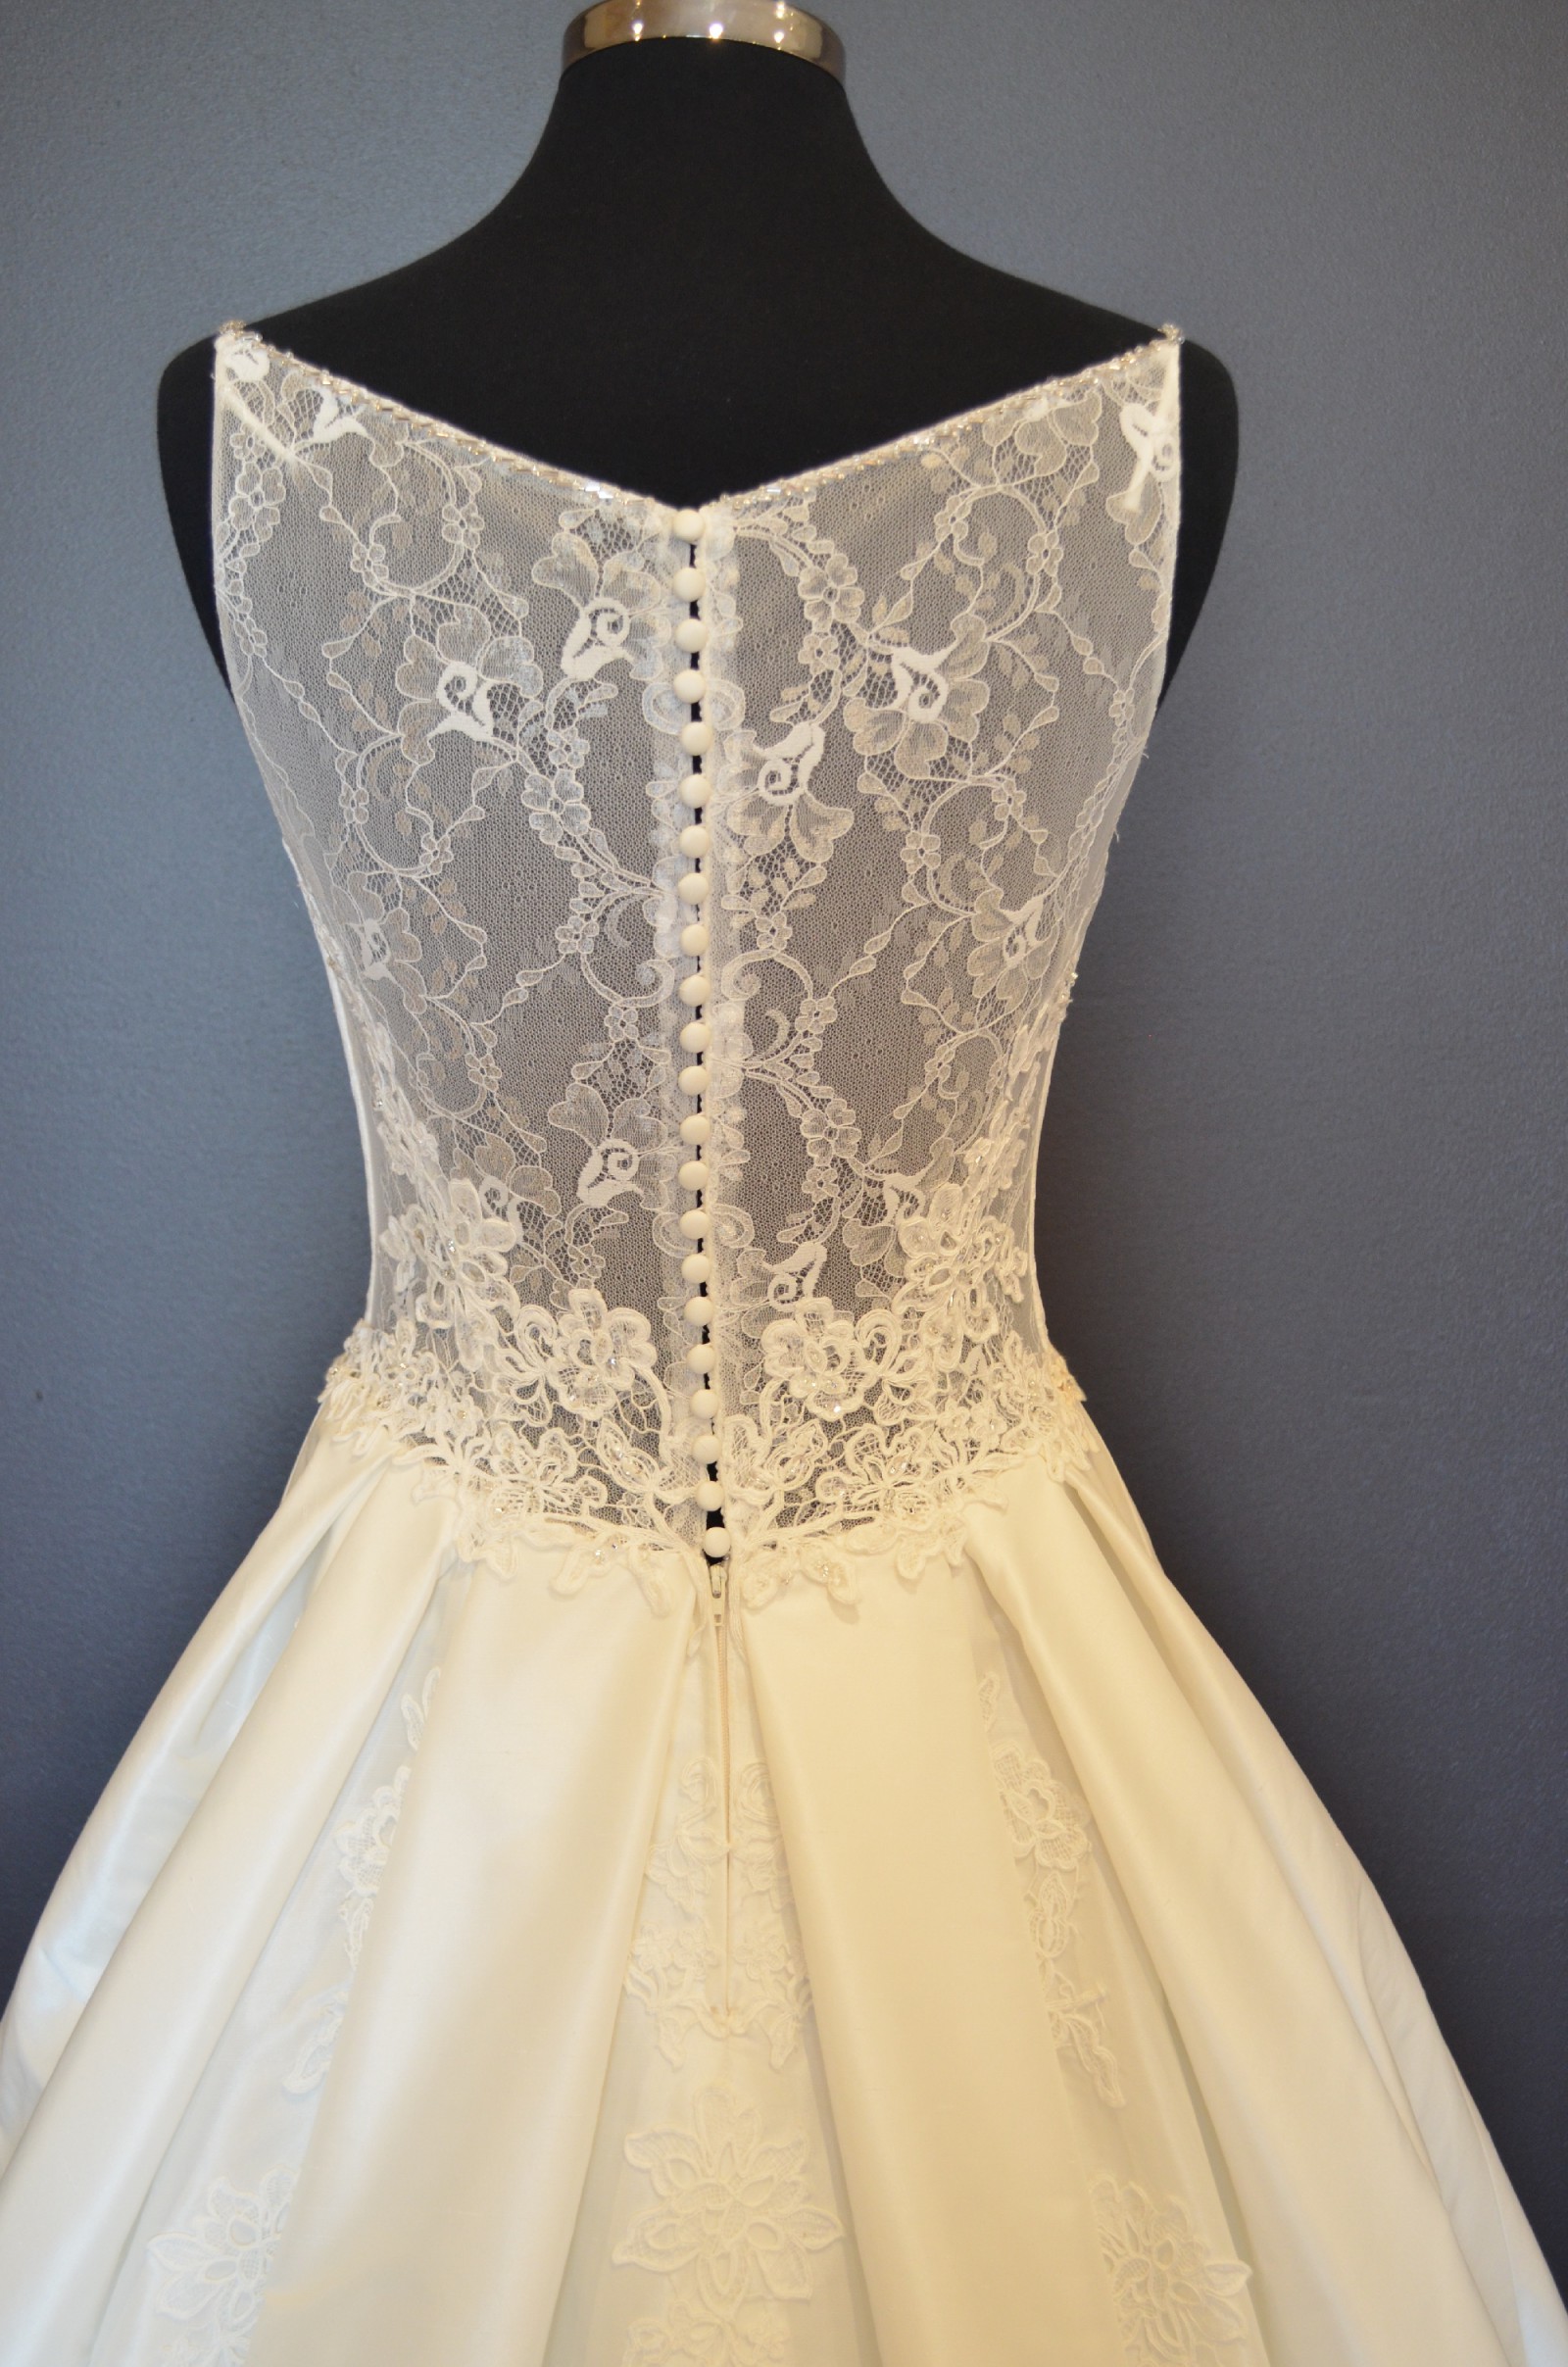 Peter Trends LV5311 Sample Wedding Dress Save 40% - Stillwhite